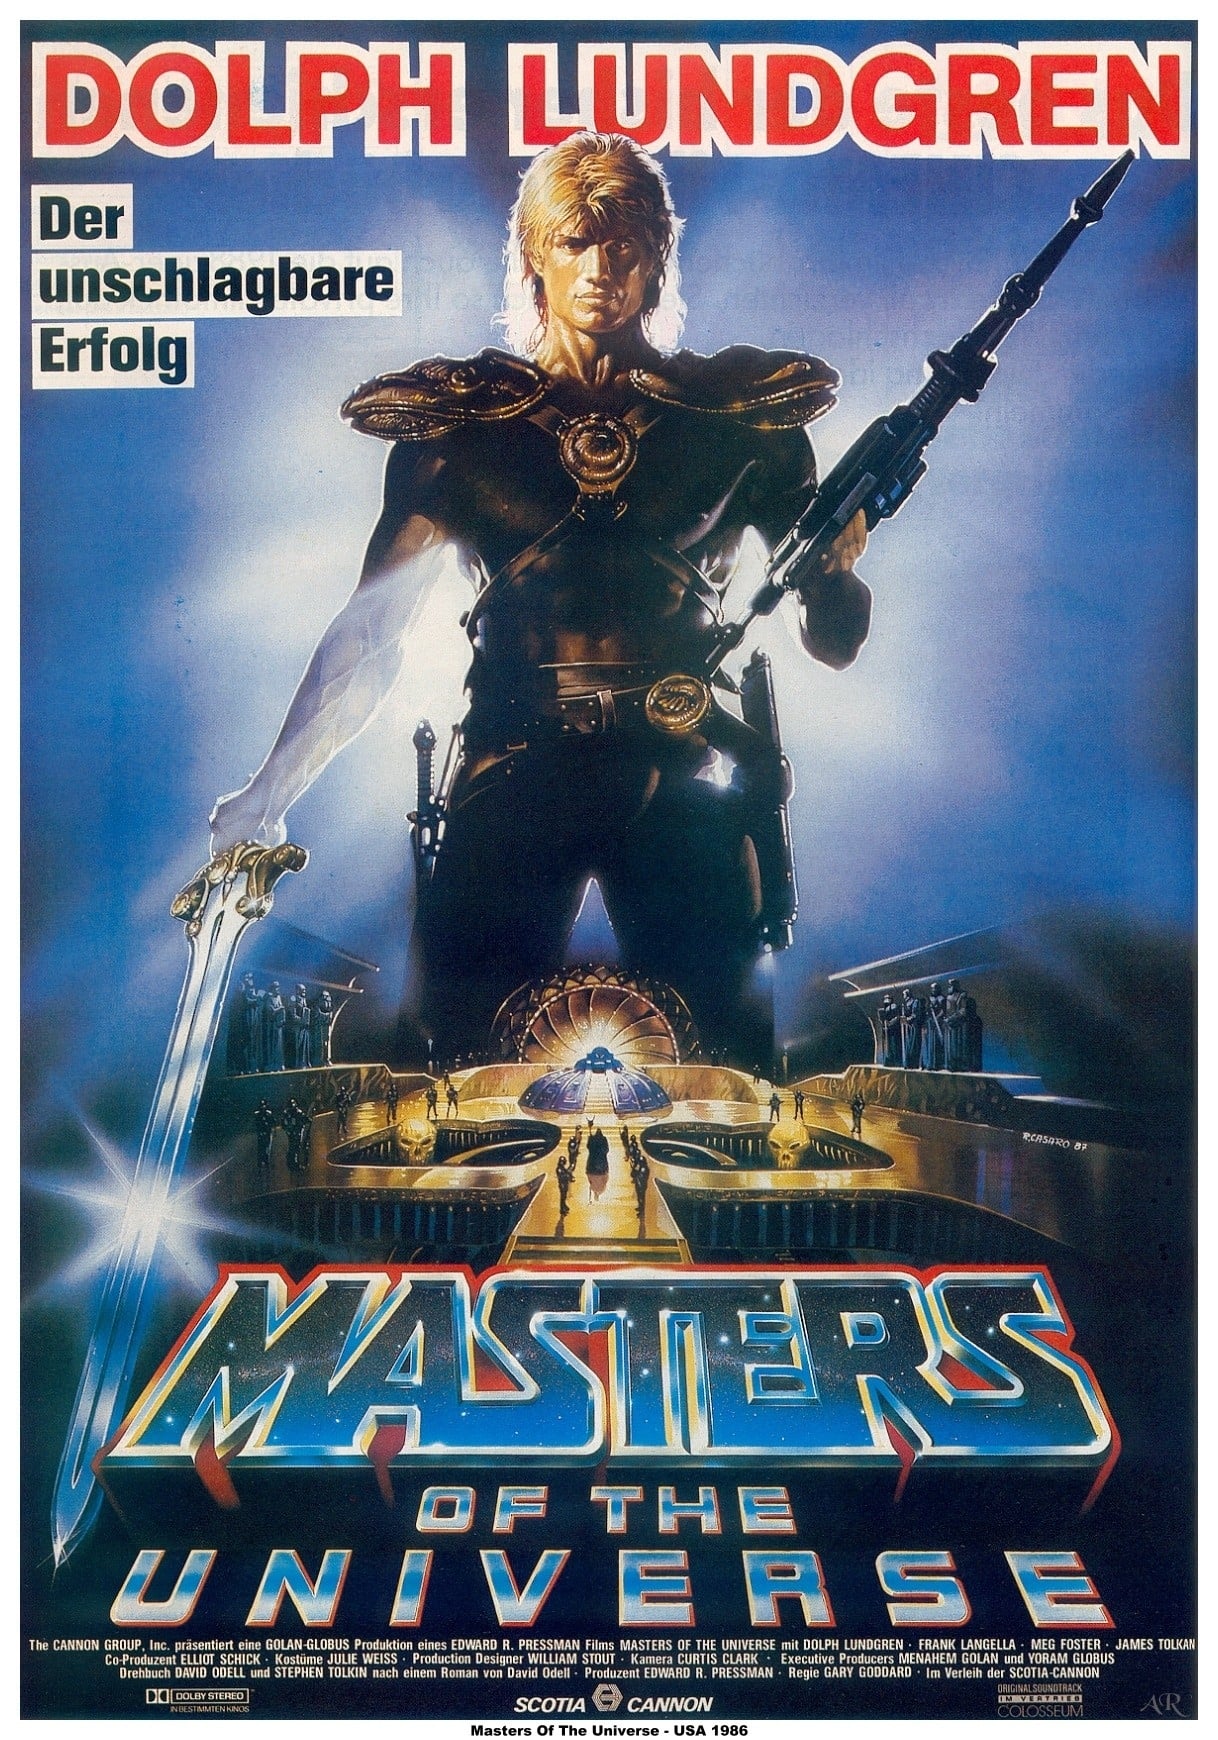 Plakat von "Masters of the Universe"